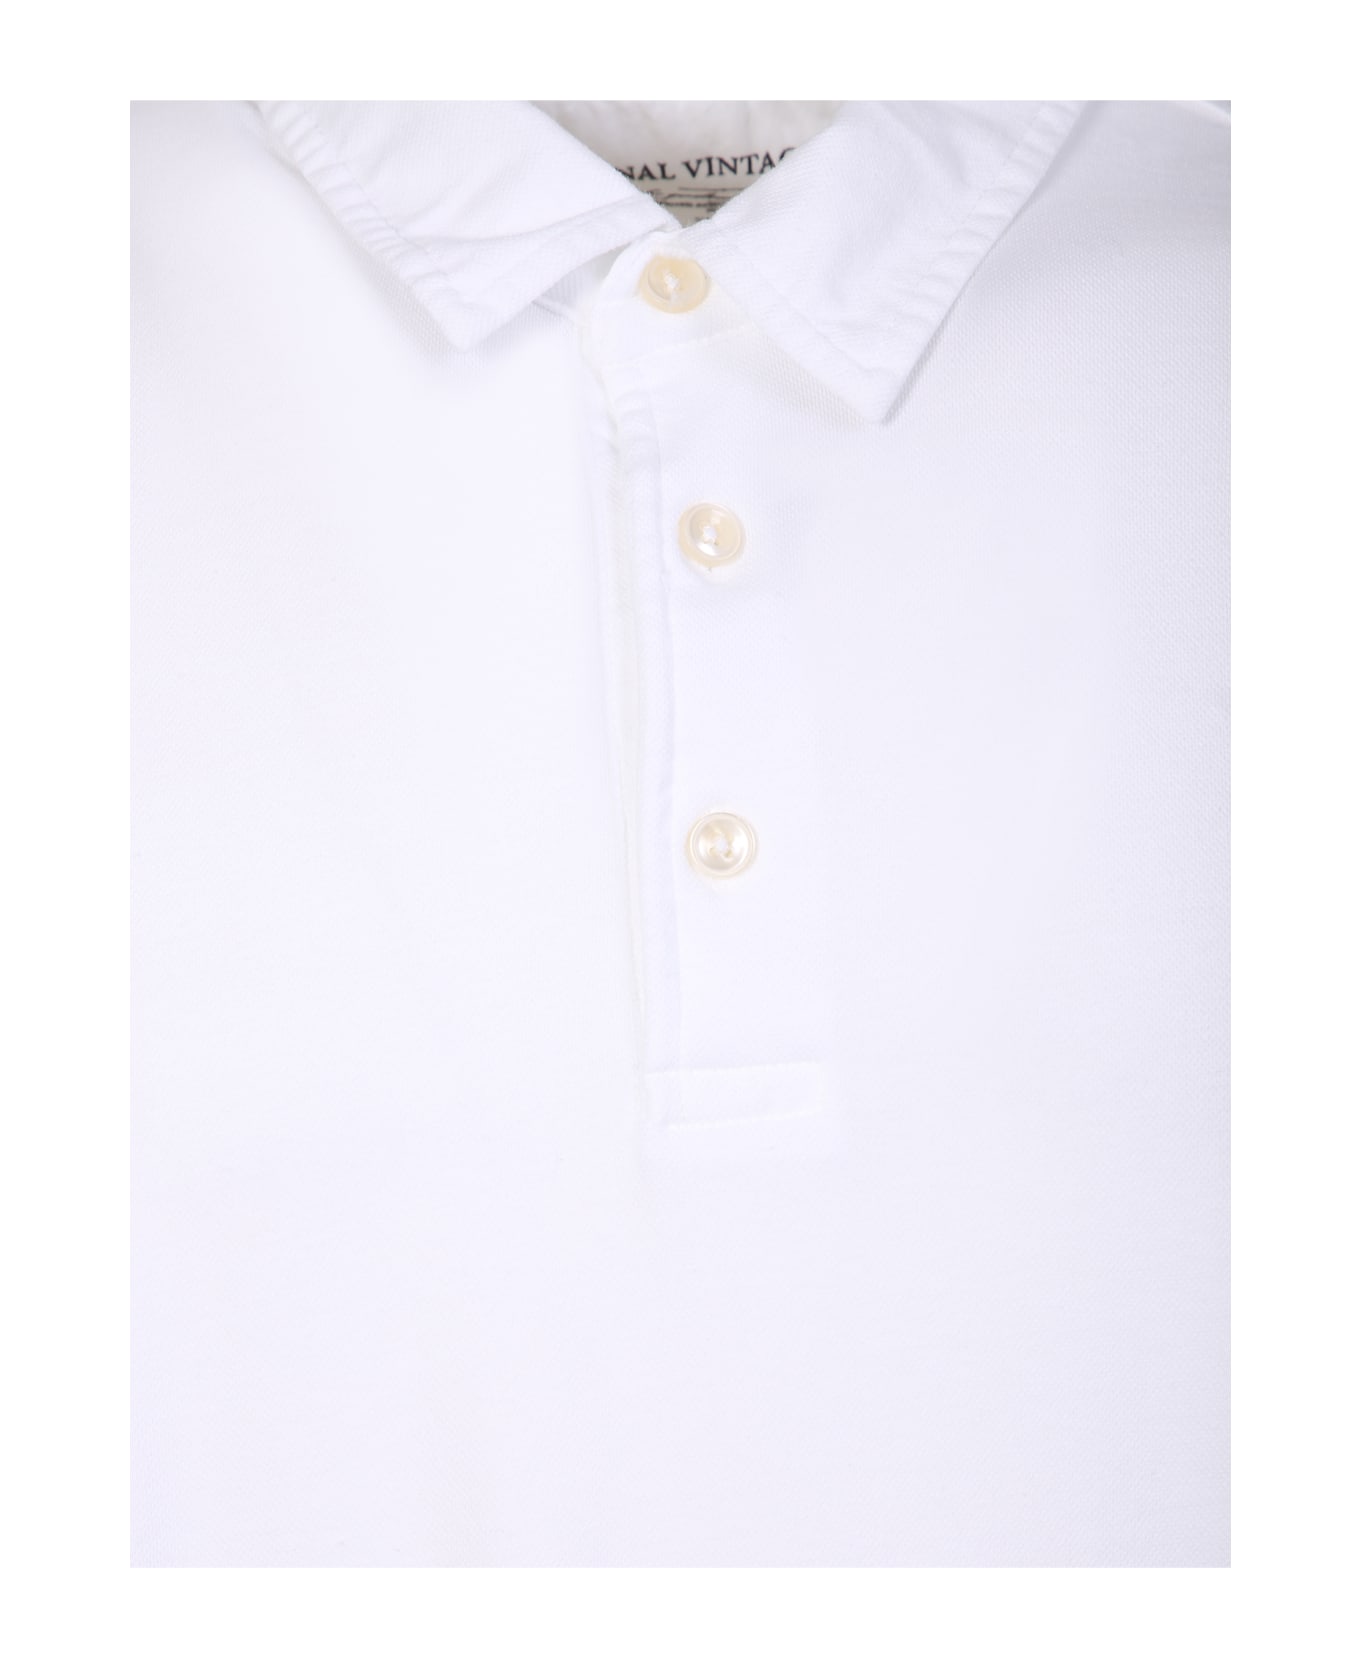 Original Vintage Style White Polo Shirt - White ポロシャツ